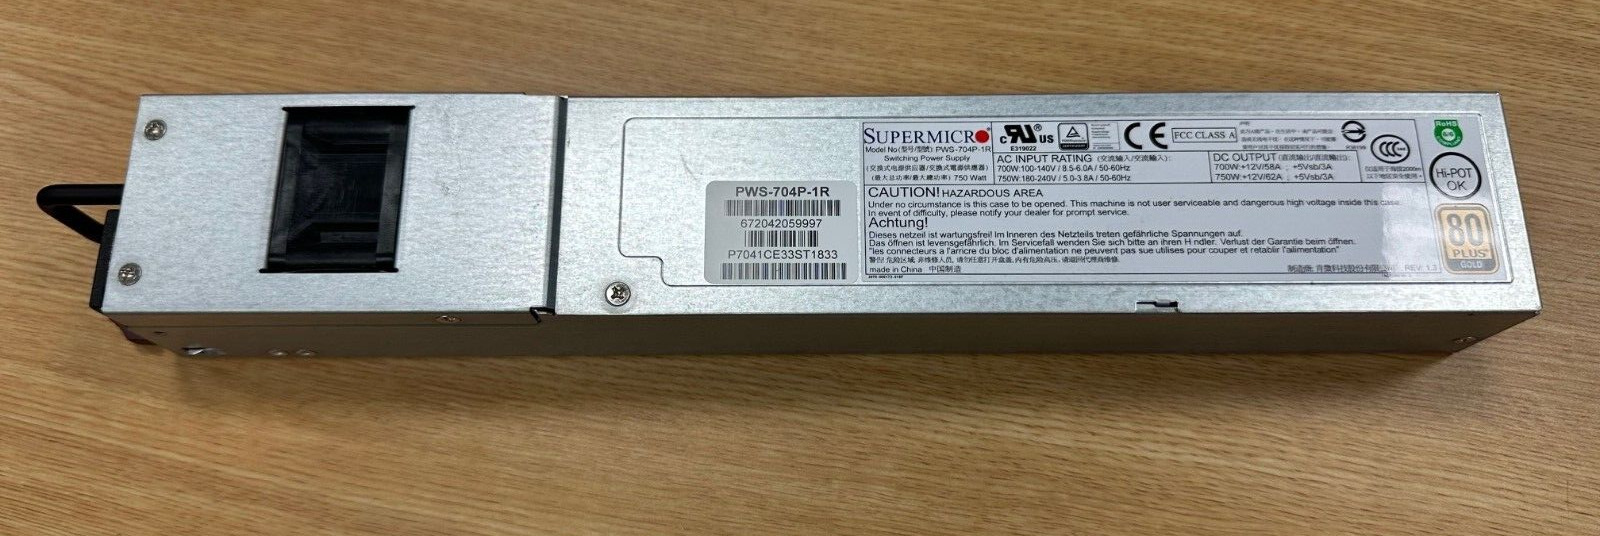 Supermicro PWS-704P-1R 750W 1U Redundant 80Plus Gold Power Supply